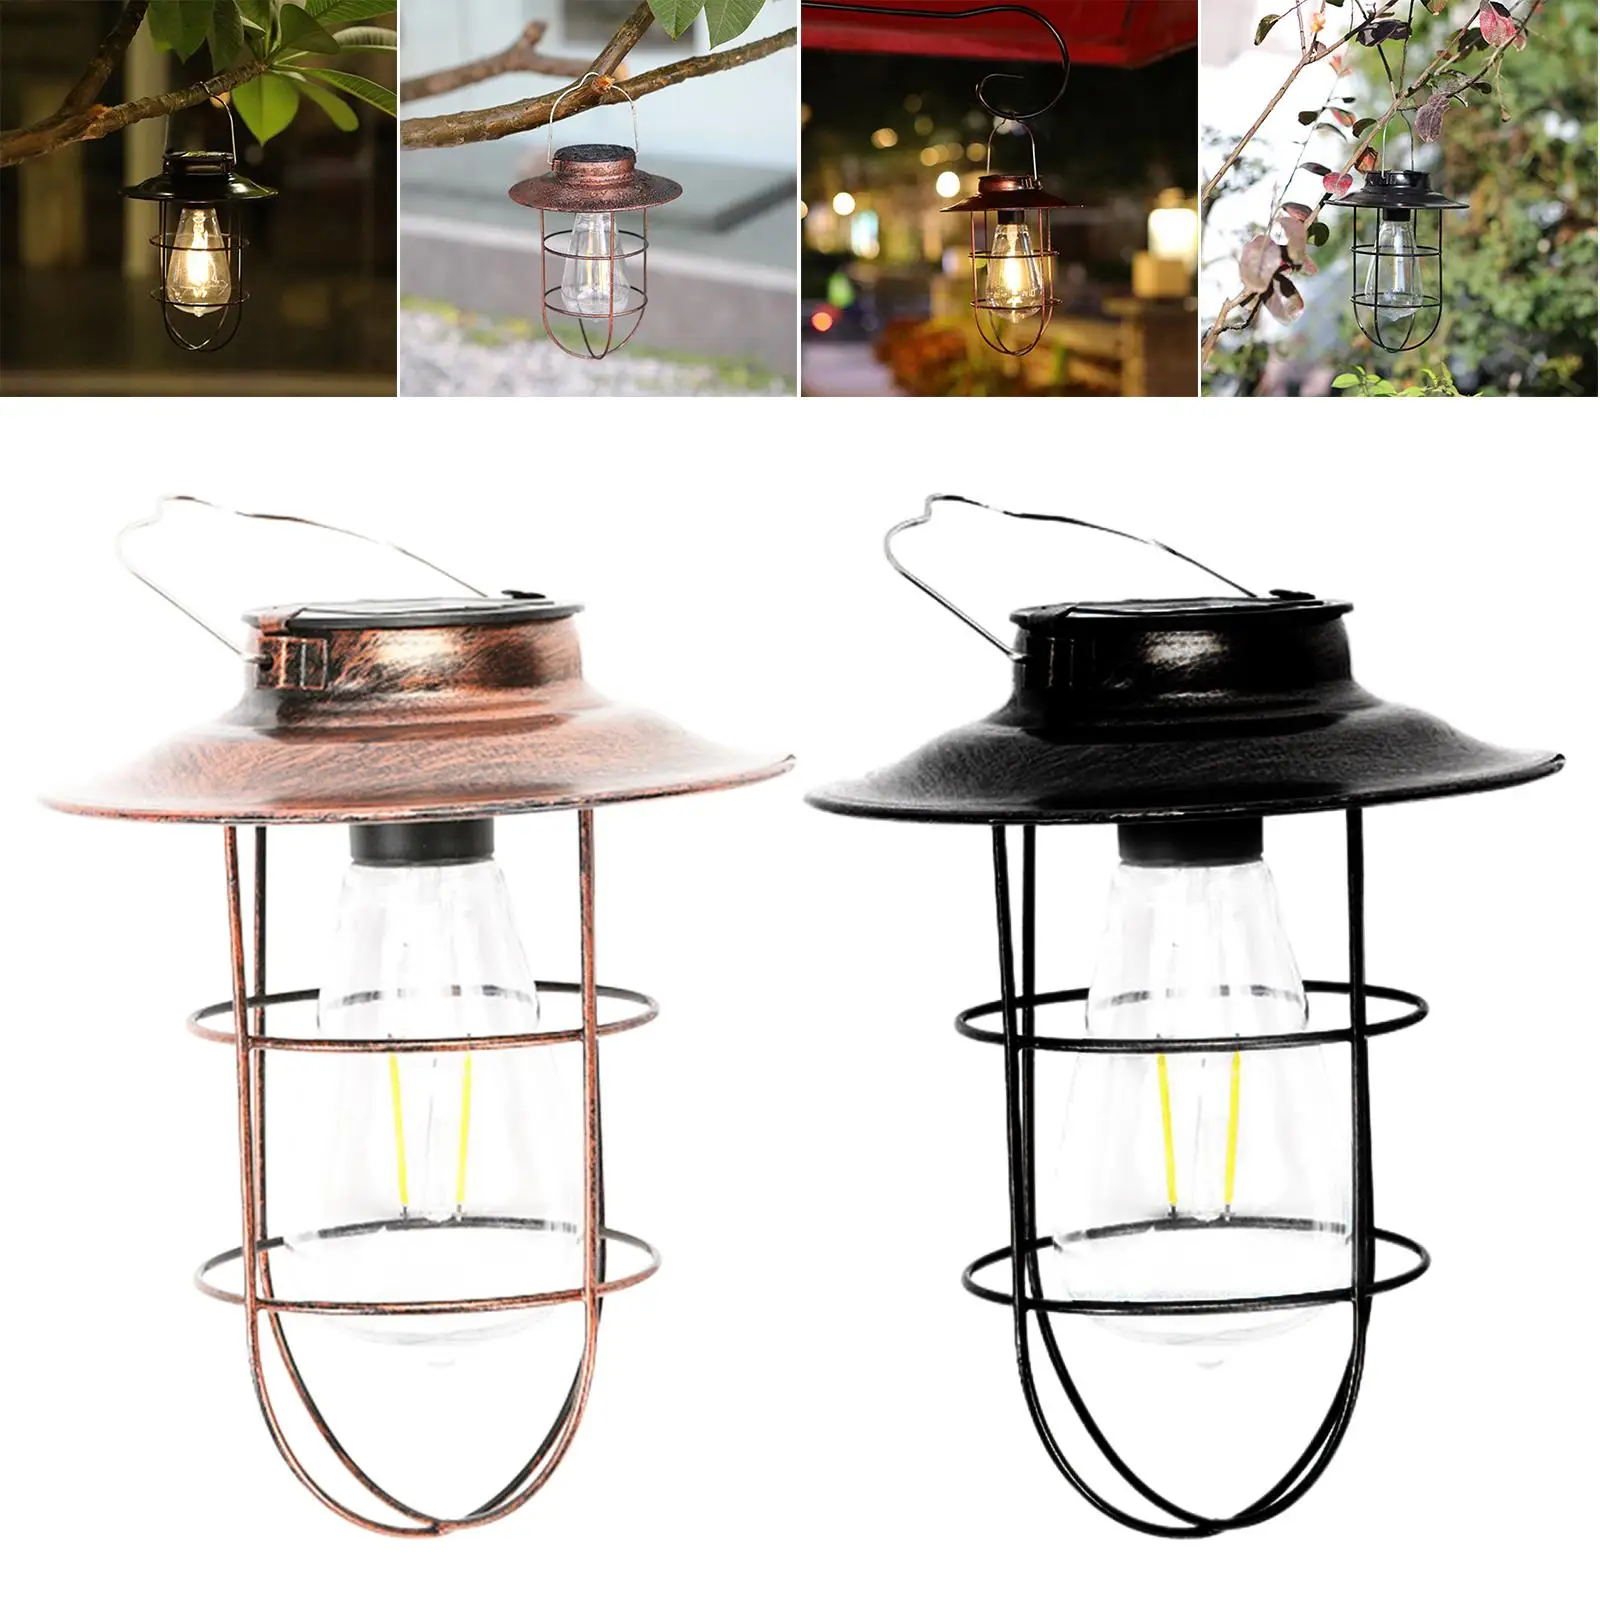 Retro Garden Solar Light Table Lanterns Dusk to Dawn IP44 Waterproof Warm White LED for Outdoor Fence Yard Patio Tree